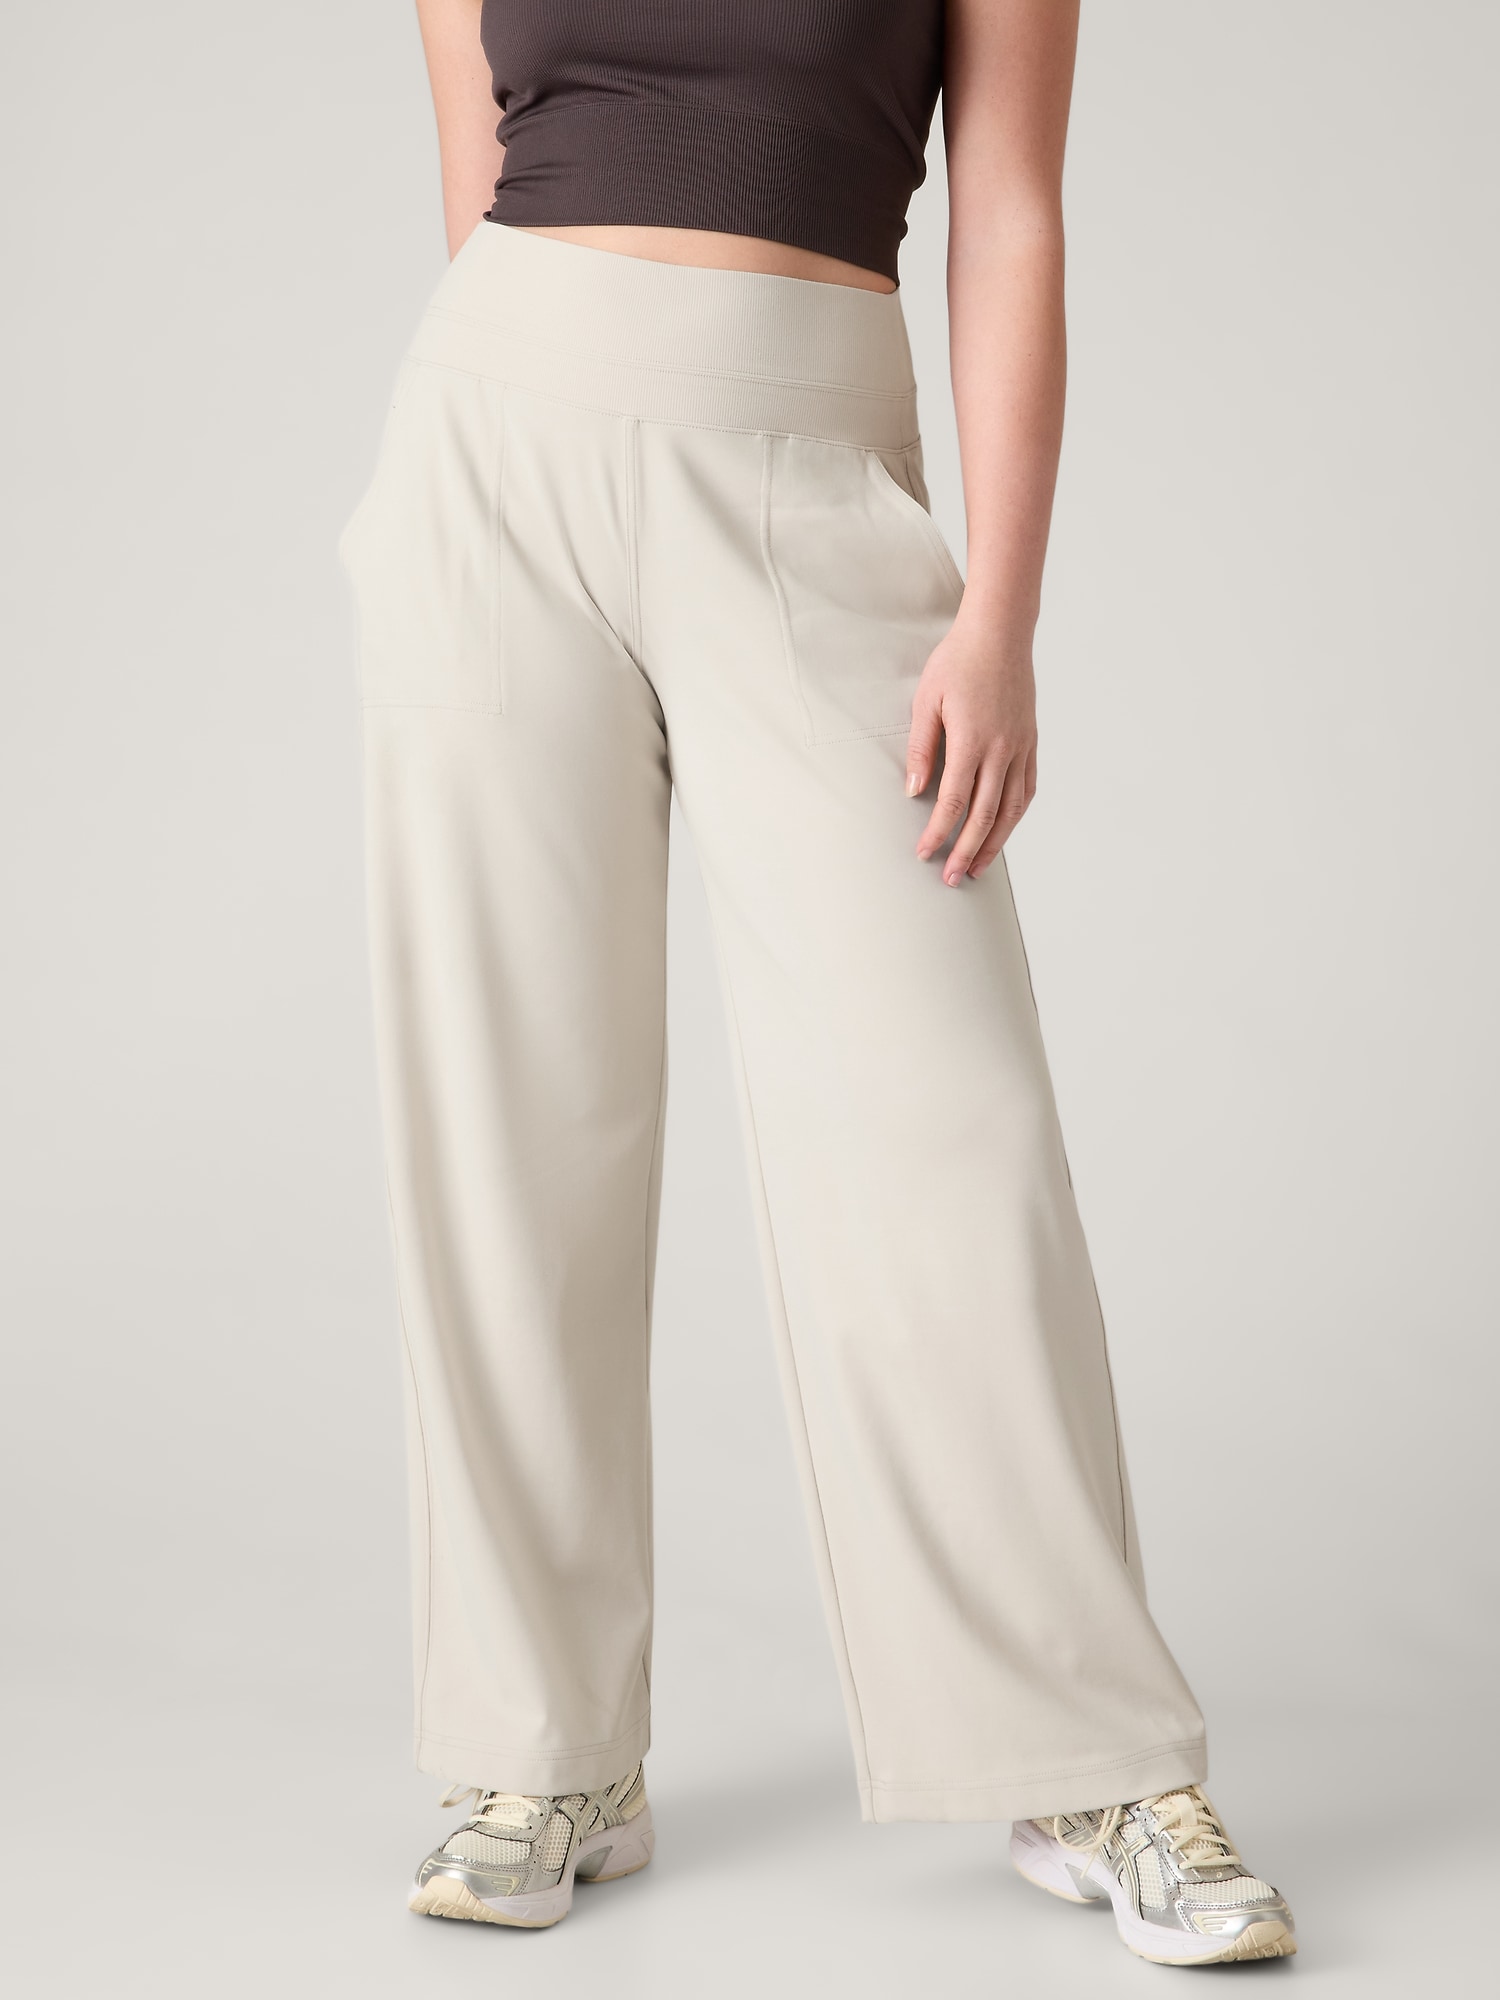 NWT Womens Size 8 GAP High Rise Wide-Leg Pants in Linen-Cotton